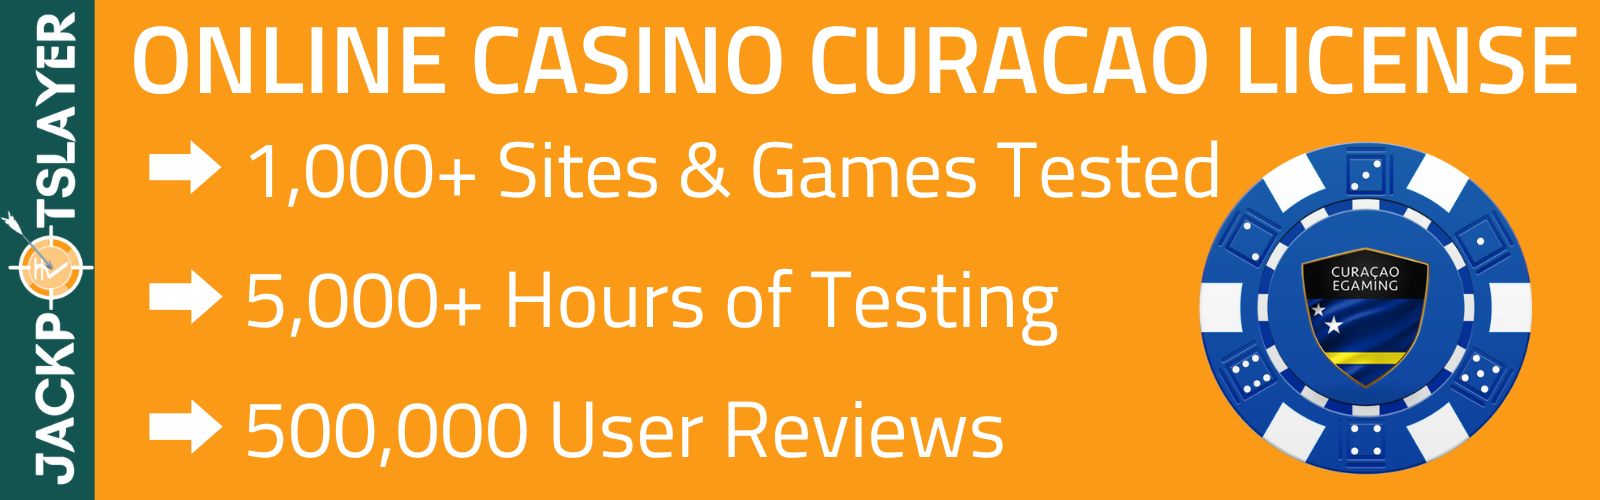 Curacao licensed online casinos